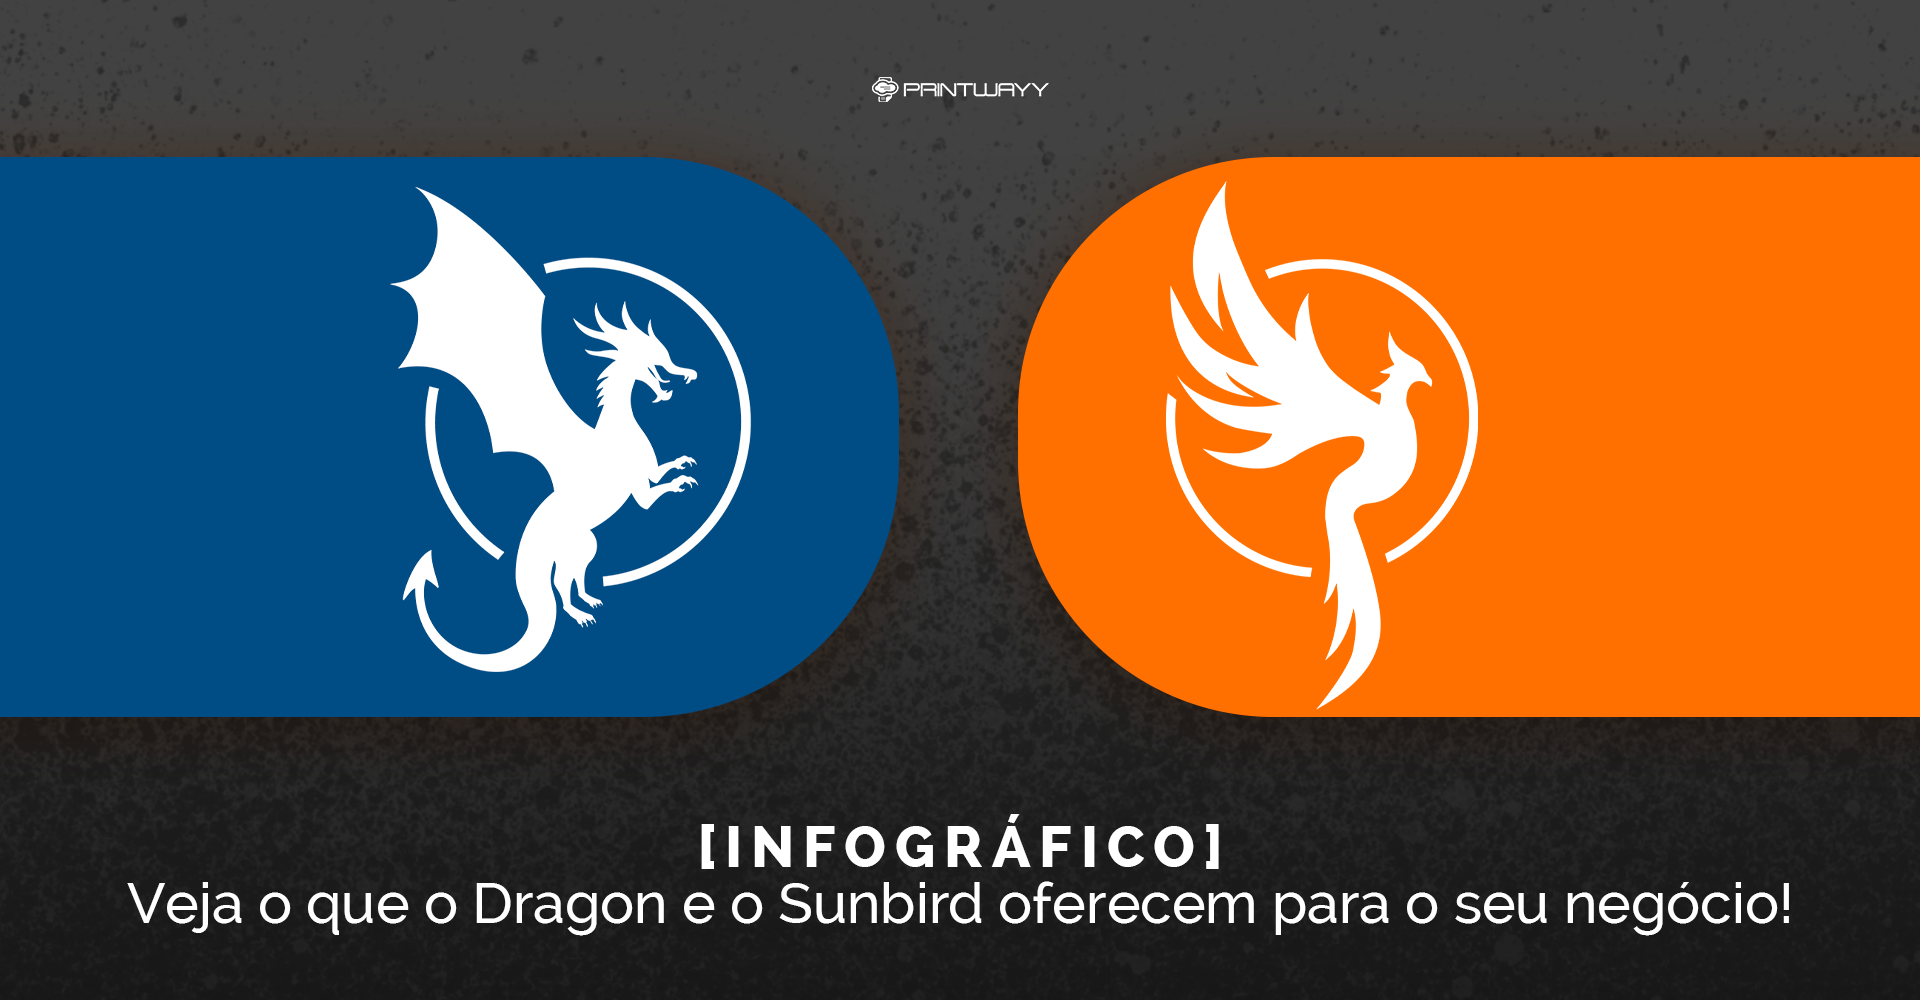 Logo dos dois produtos da PrintWayy, Dragon e Sunbird.